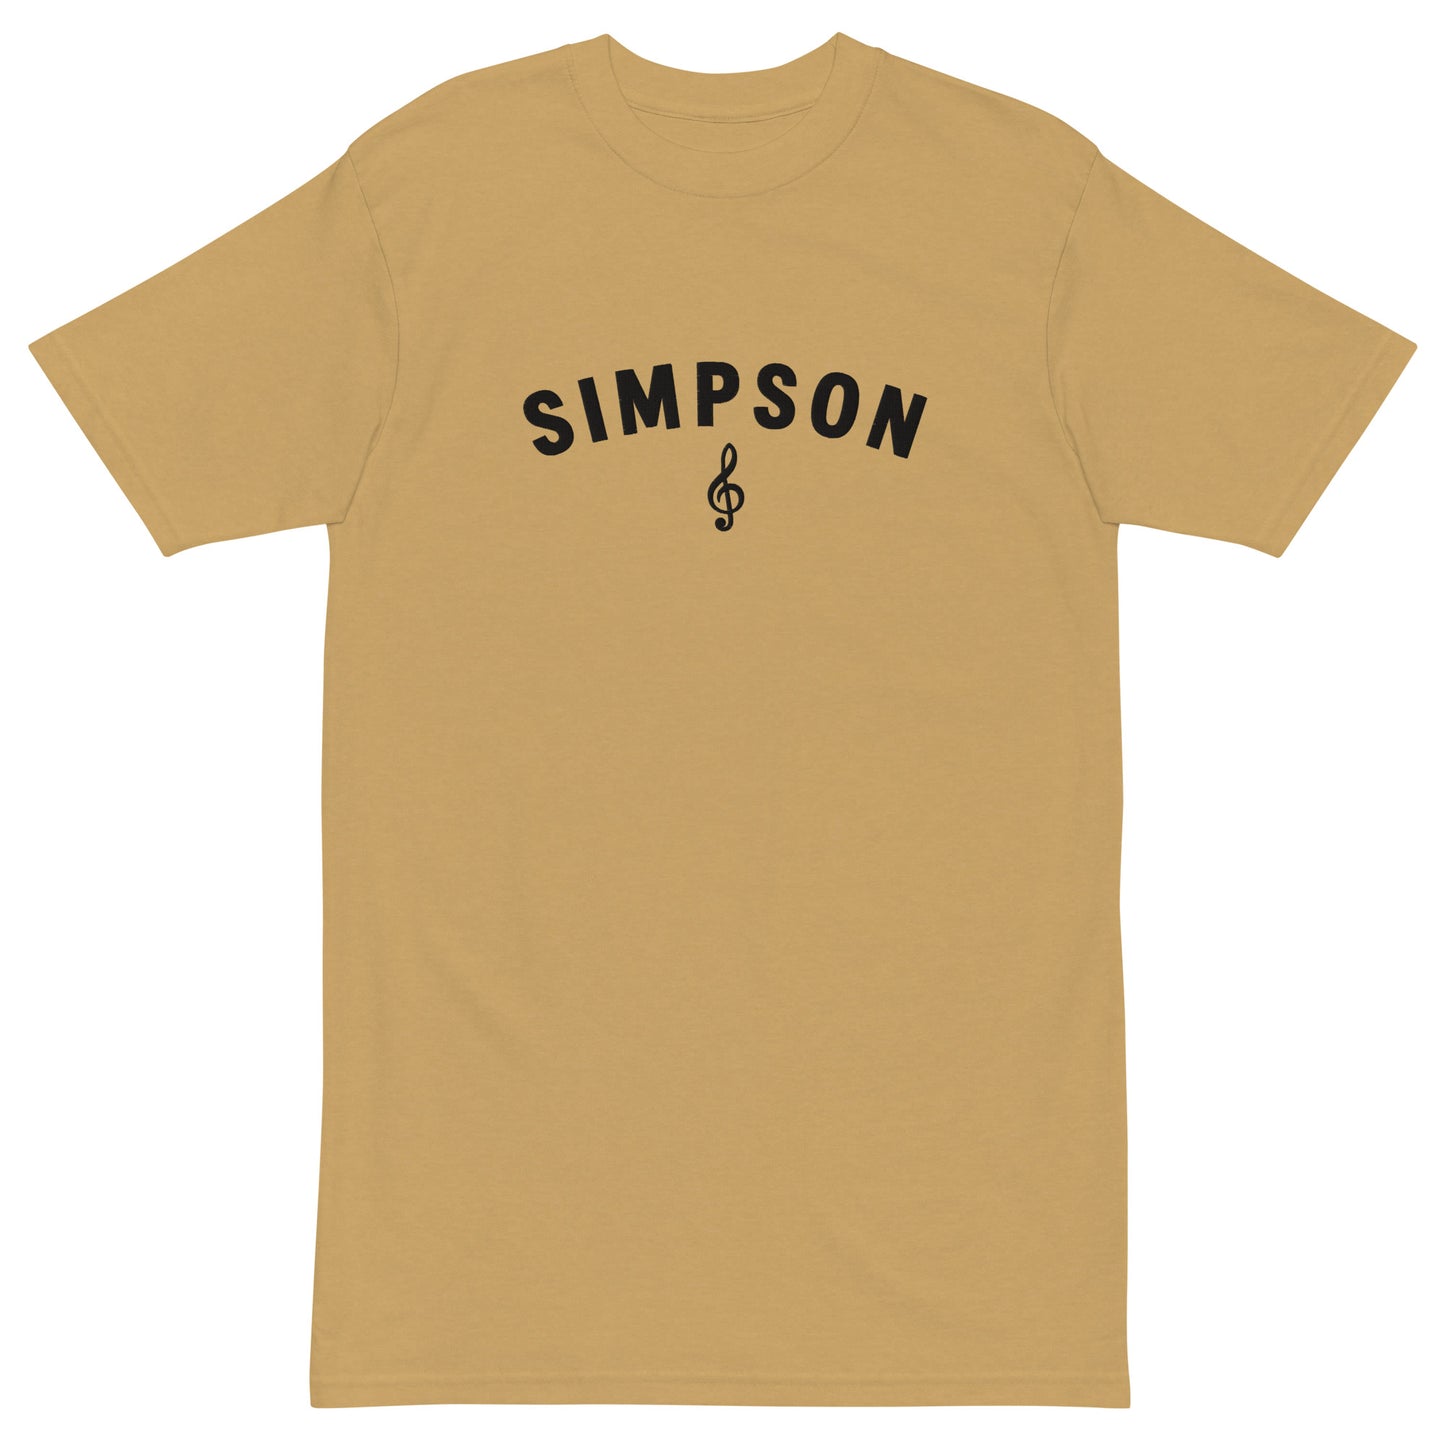 Simpson Arc Embroidered Premium T-shirt